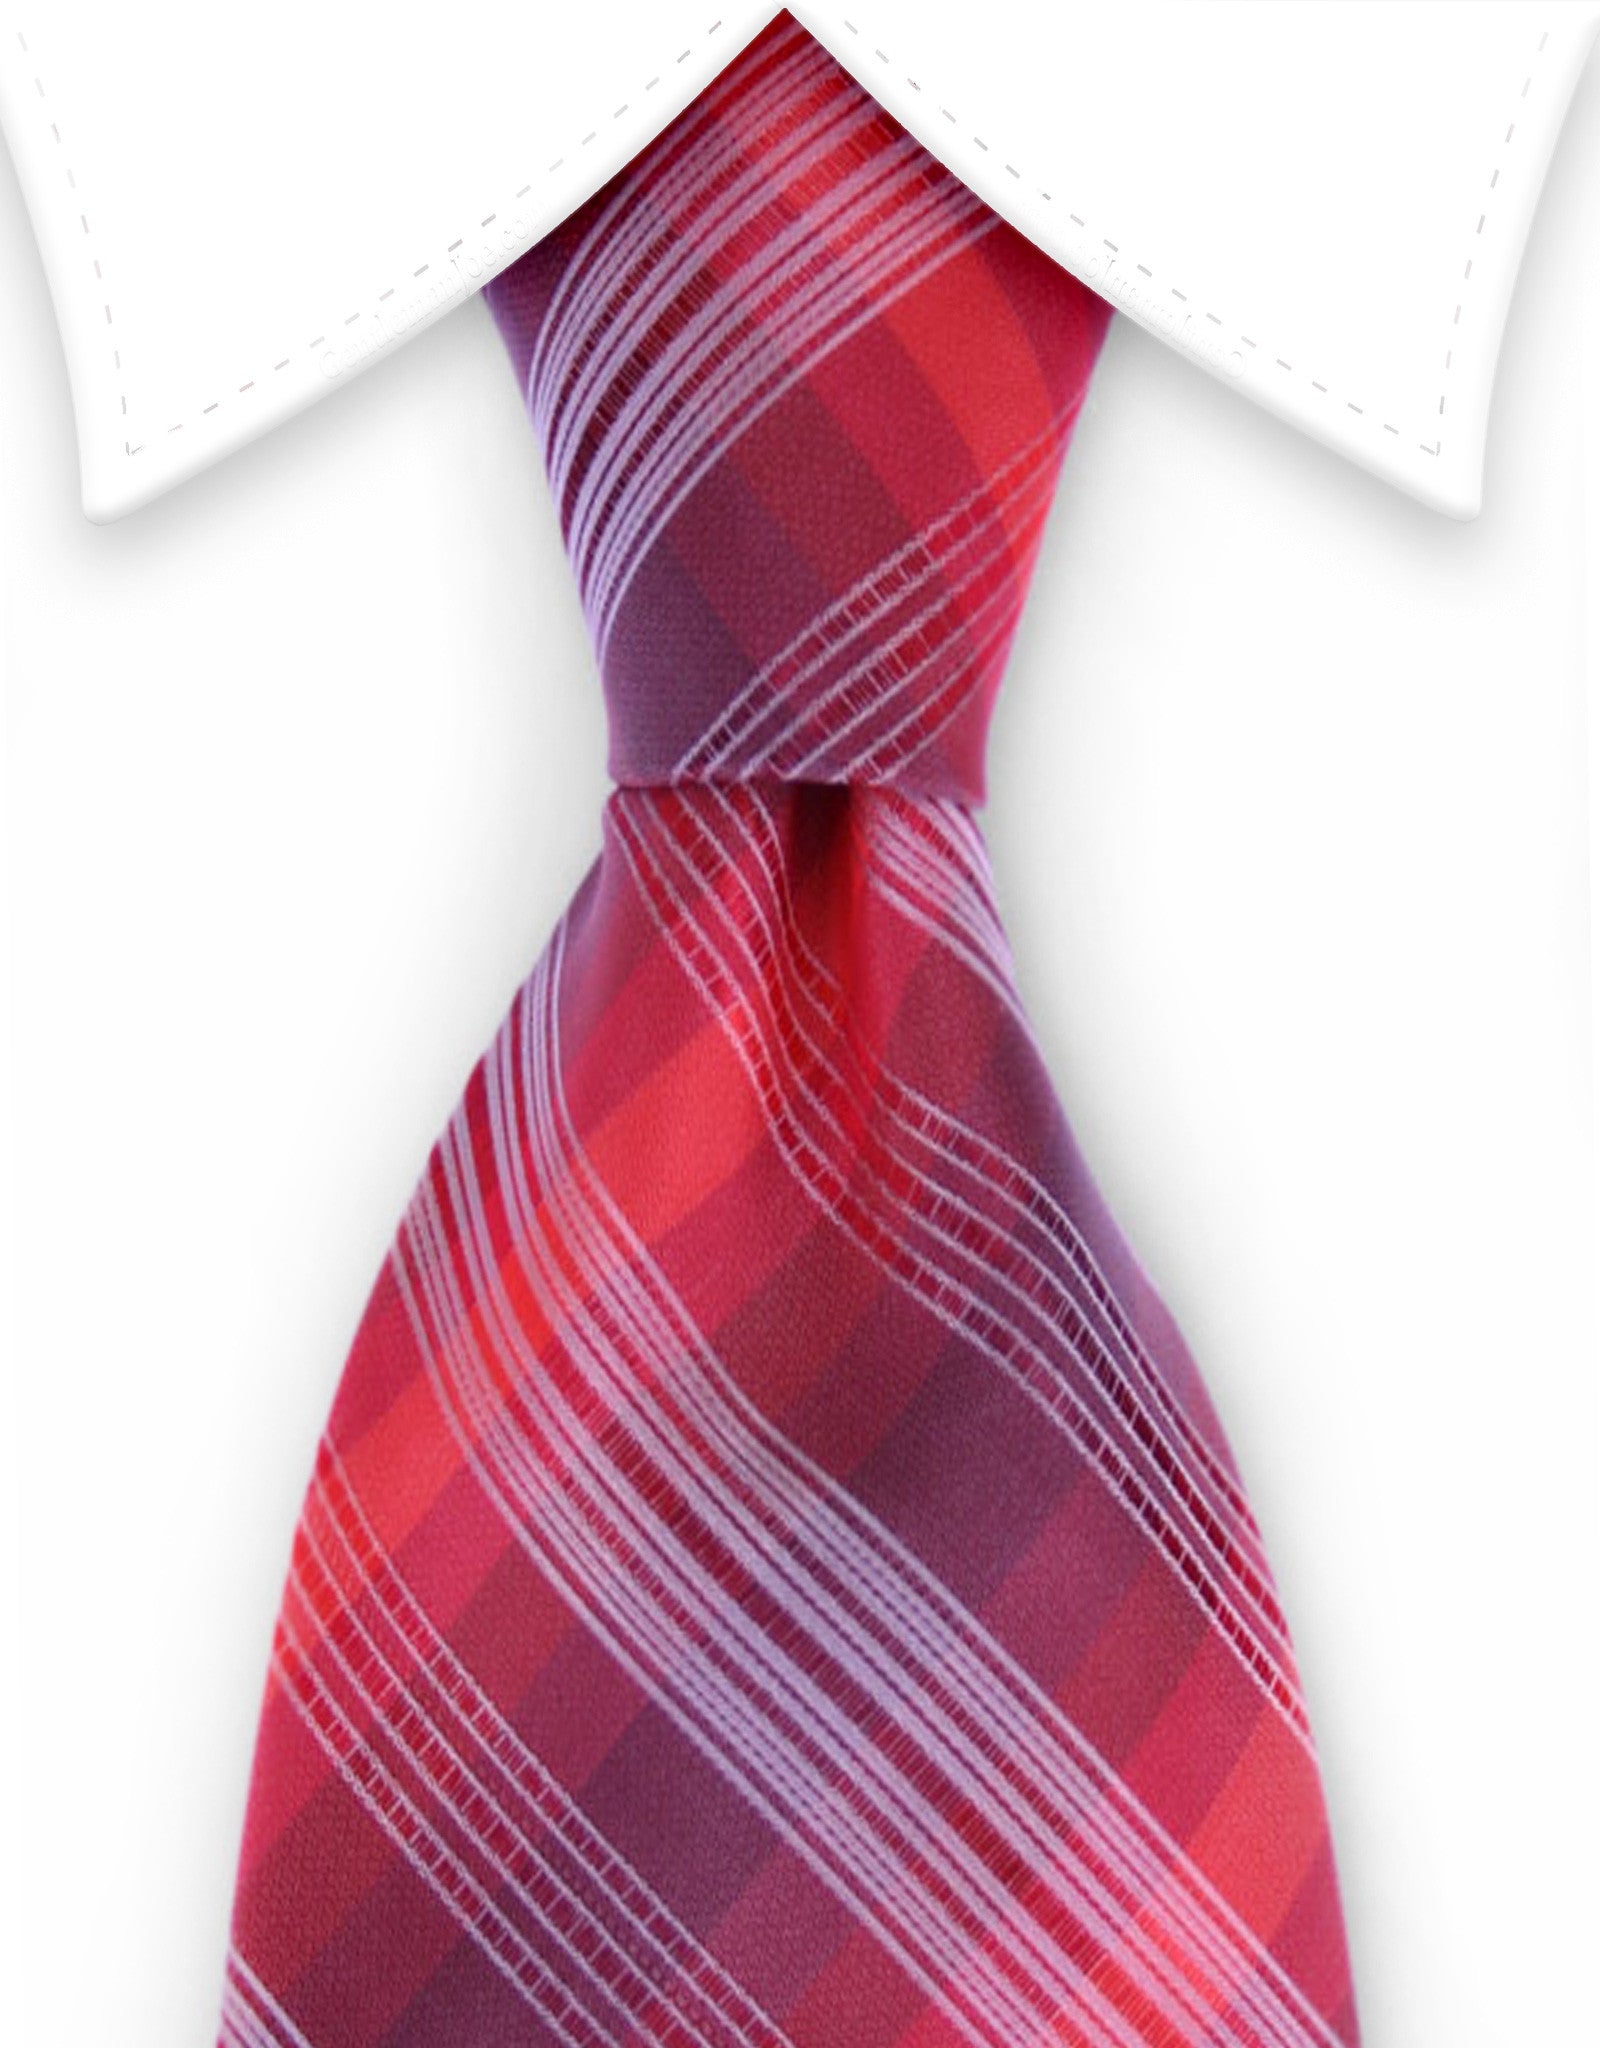 Red Plaid Tie